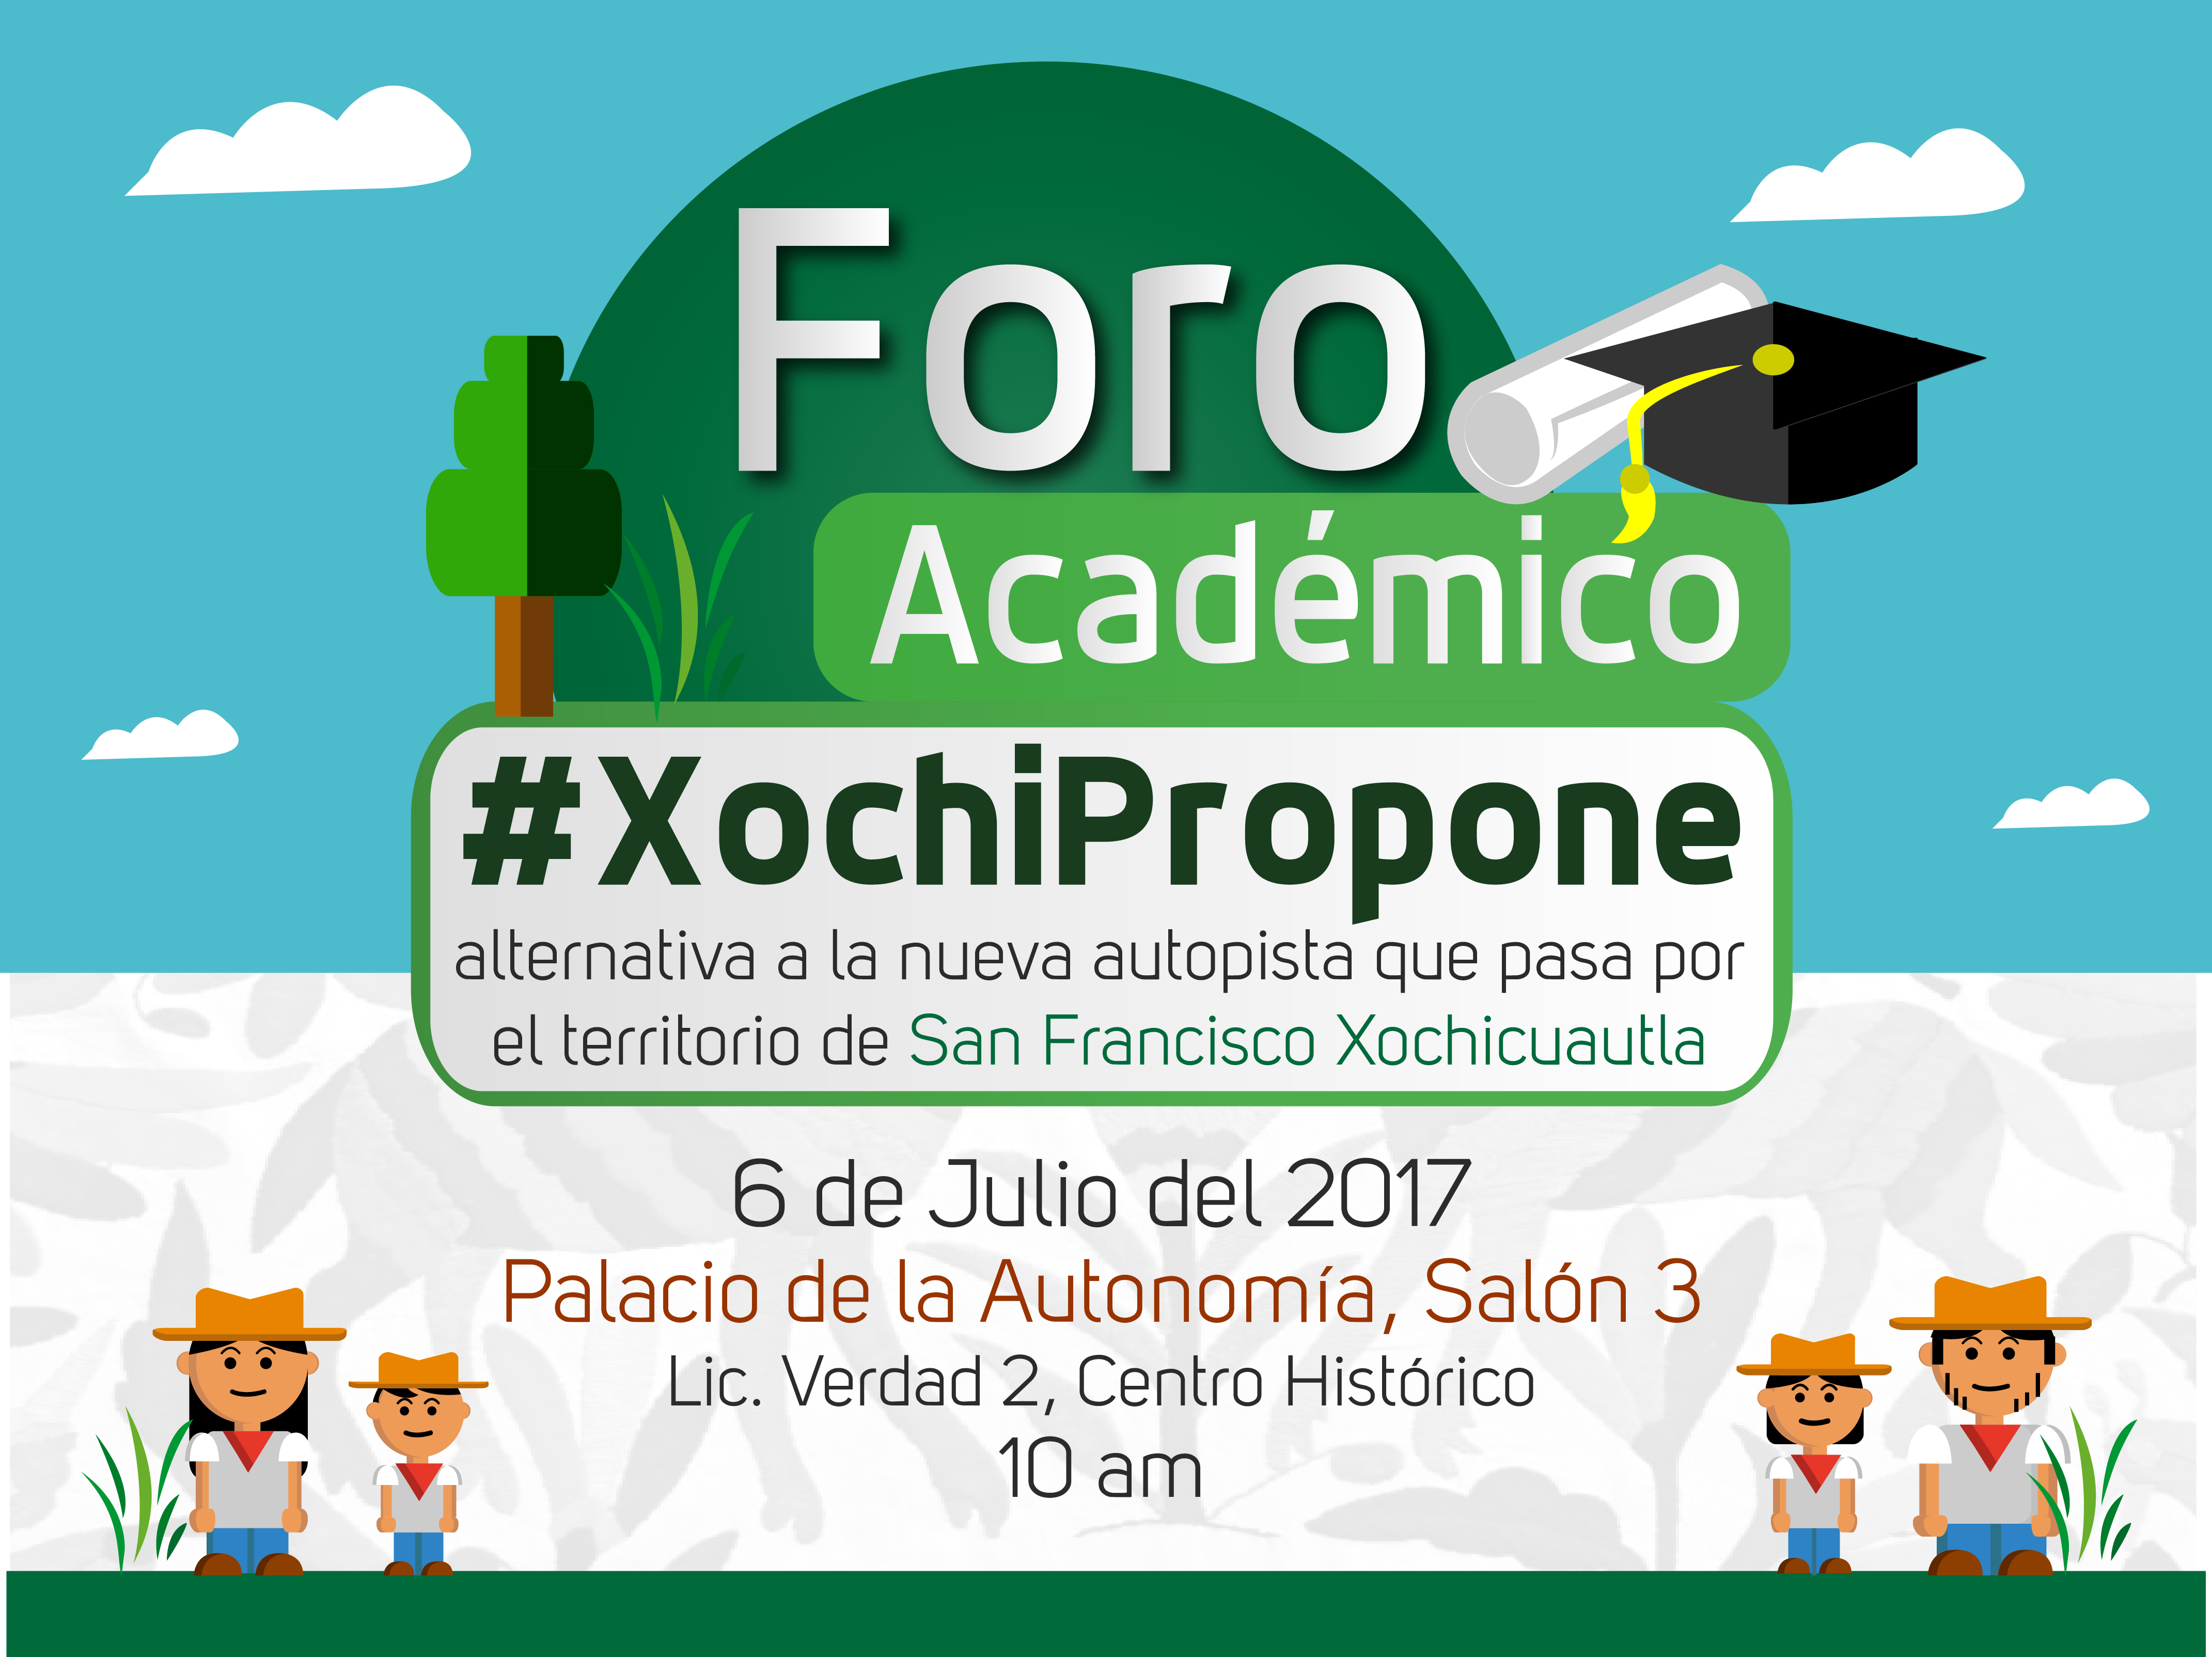 Foro académico #XochiPropone